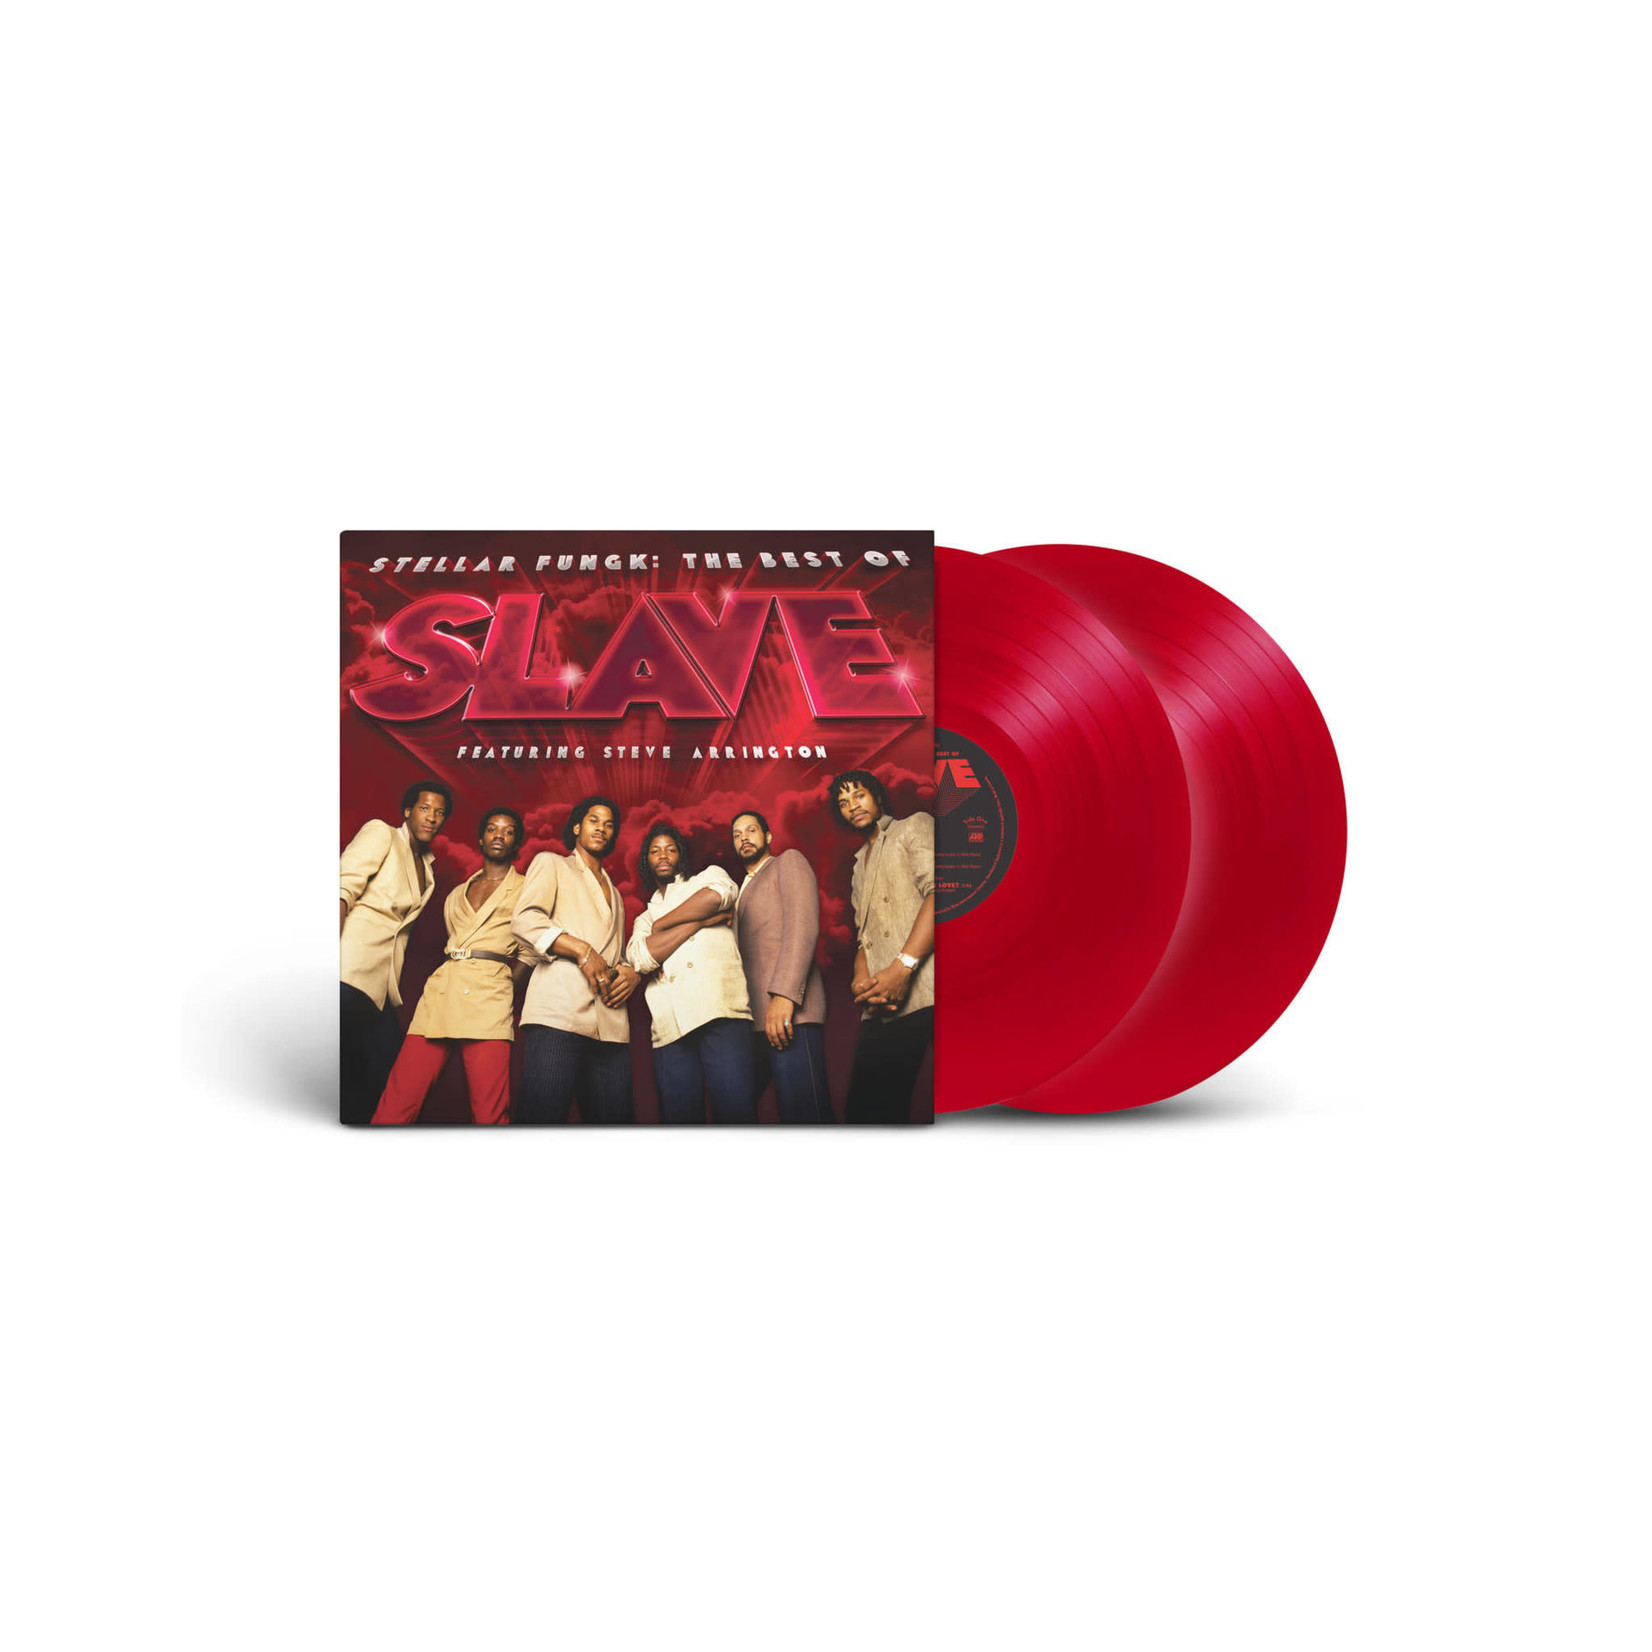 [New] Slave - Stellar Fungk - The Best Of Slave Featuring Steve Arrington (2LP, ruby red vinyl)